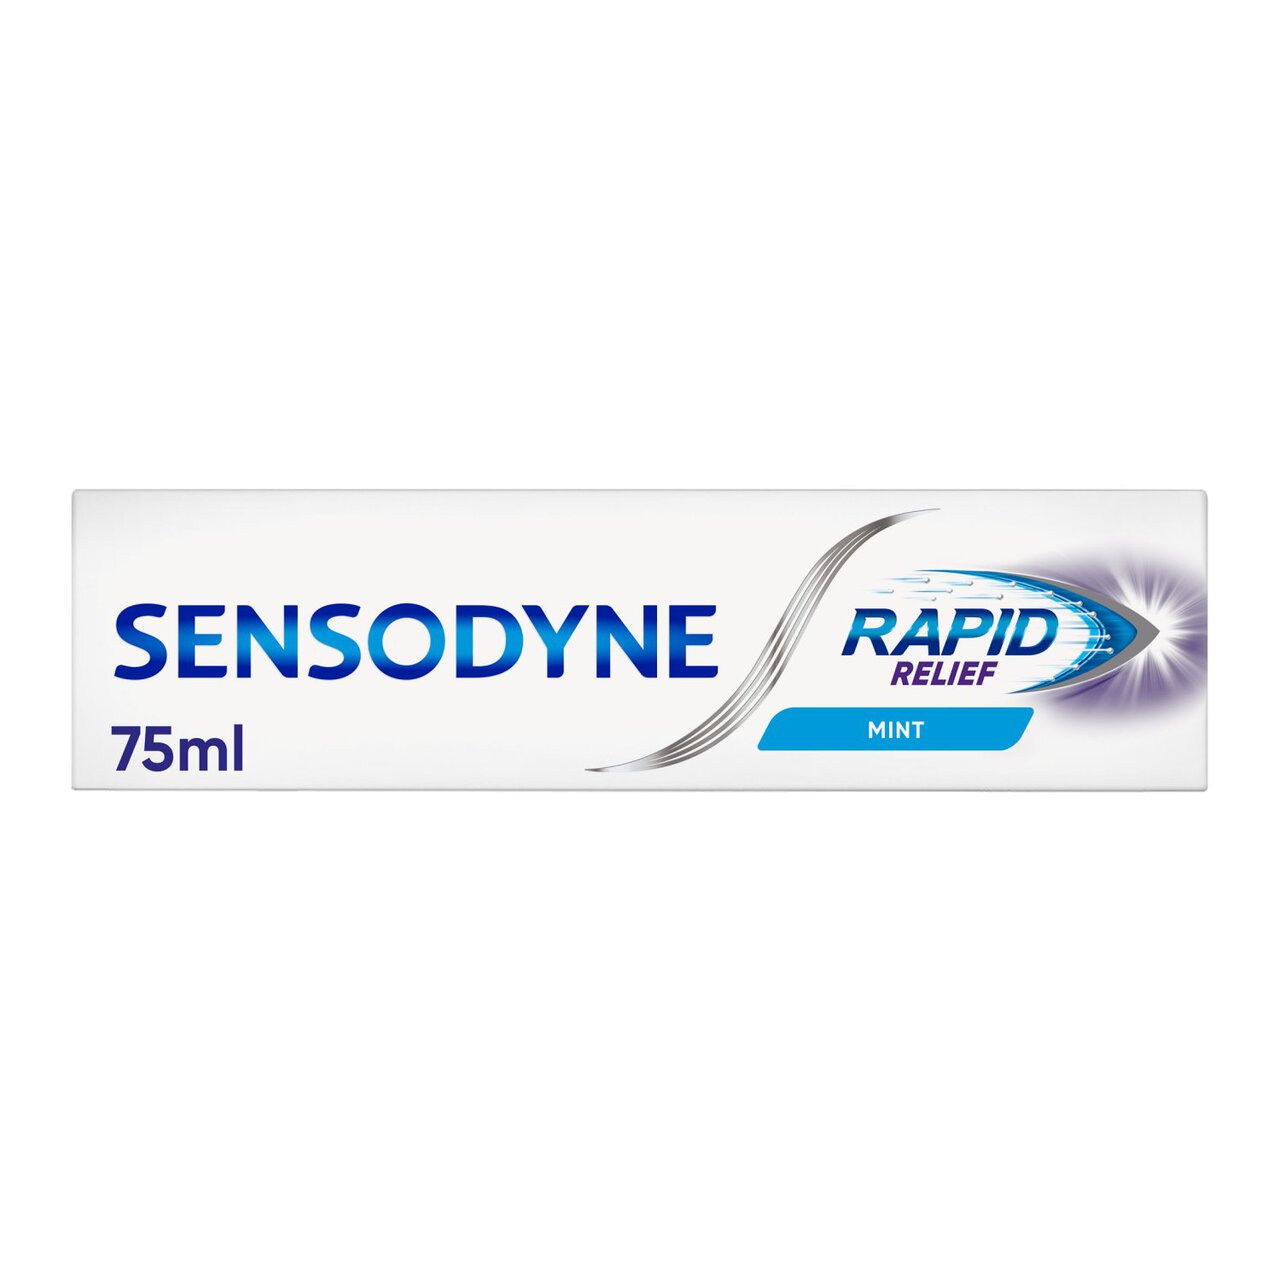 Sensodyne Sensitive Rapid Relief Mint Toothpaste 75ml 75ml